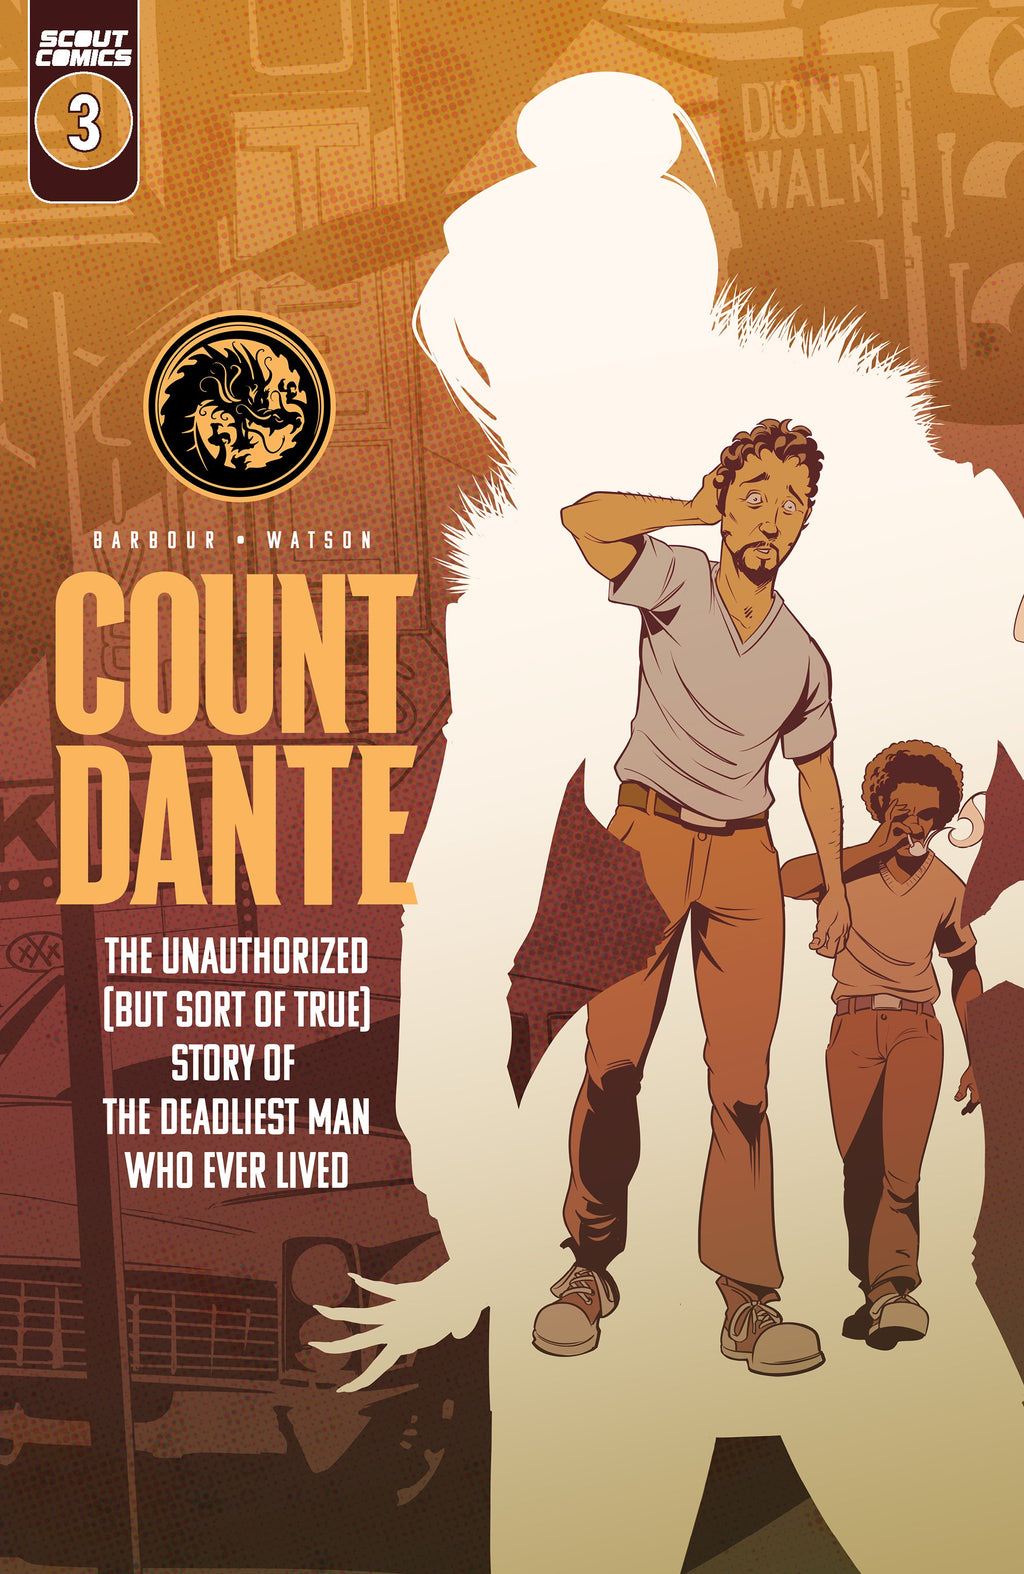 Count Dante #3 - DIGITAL COPY